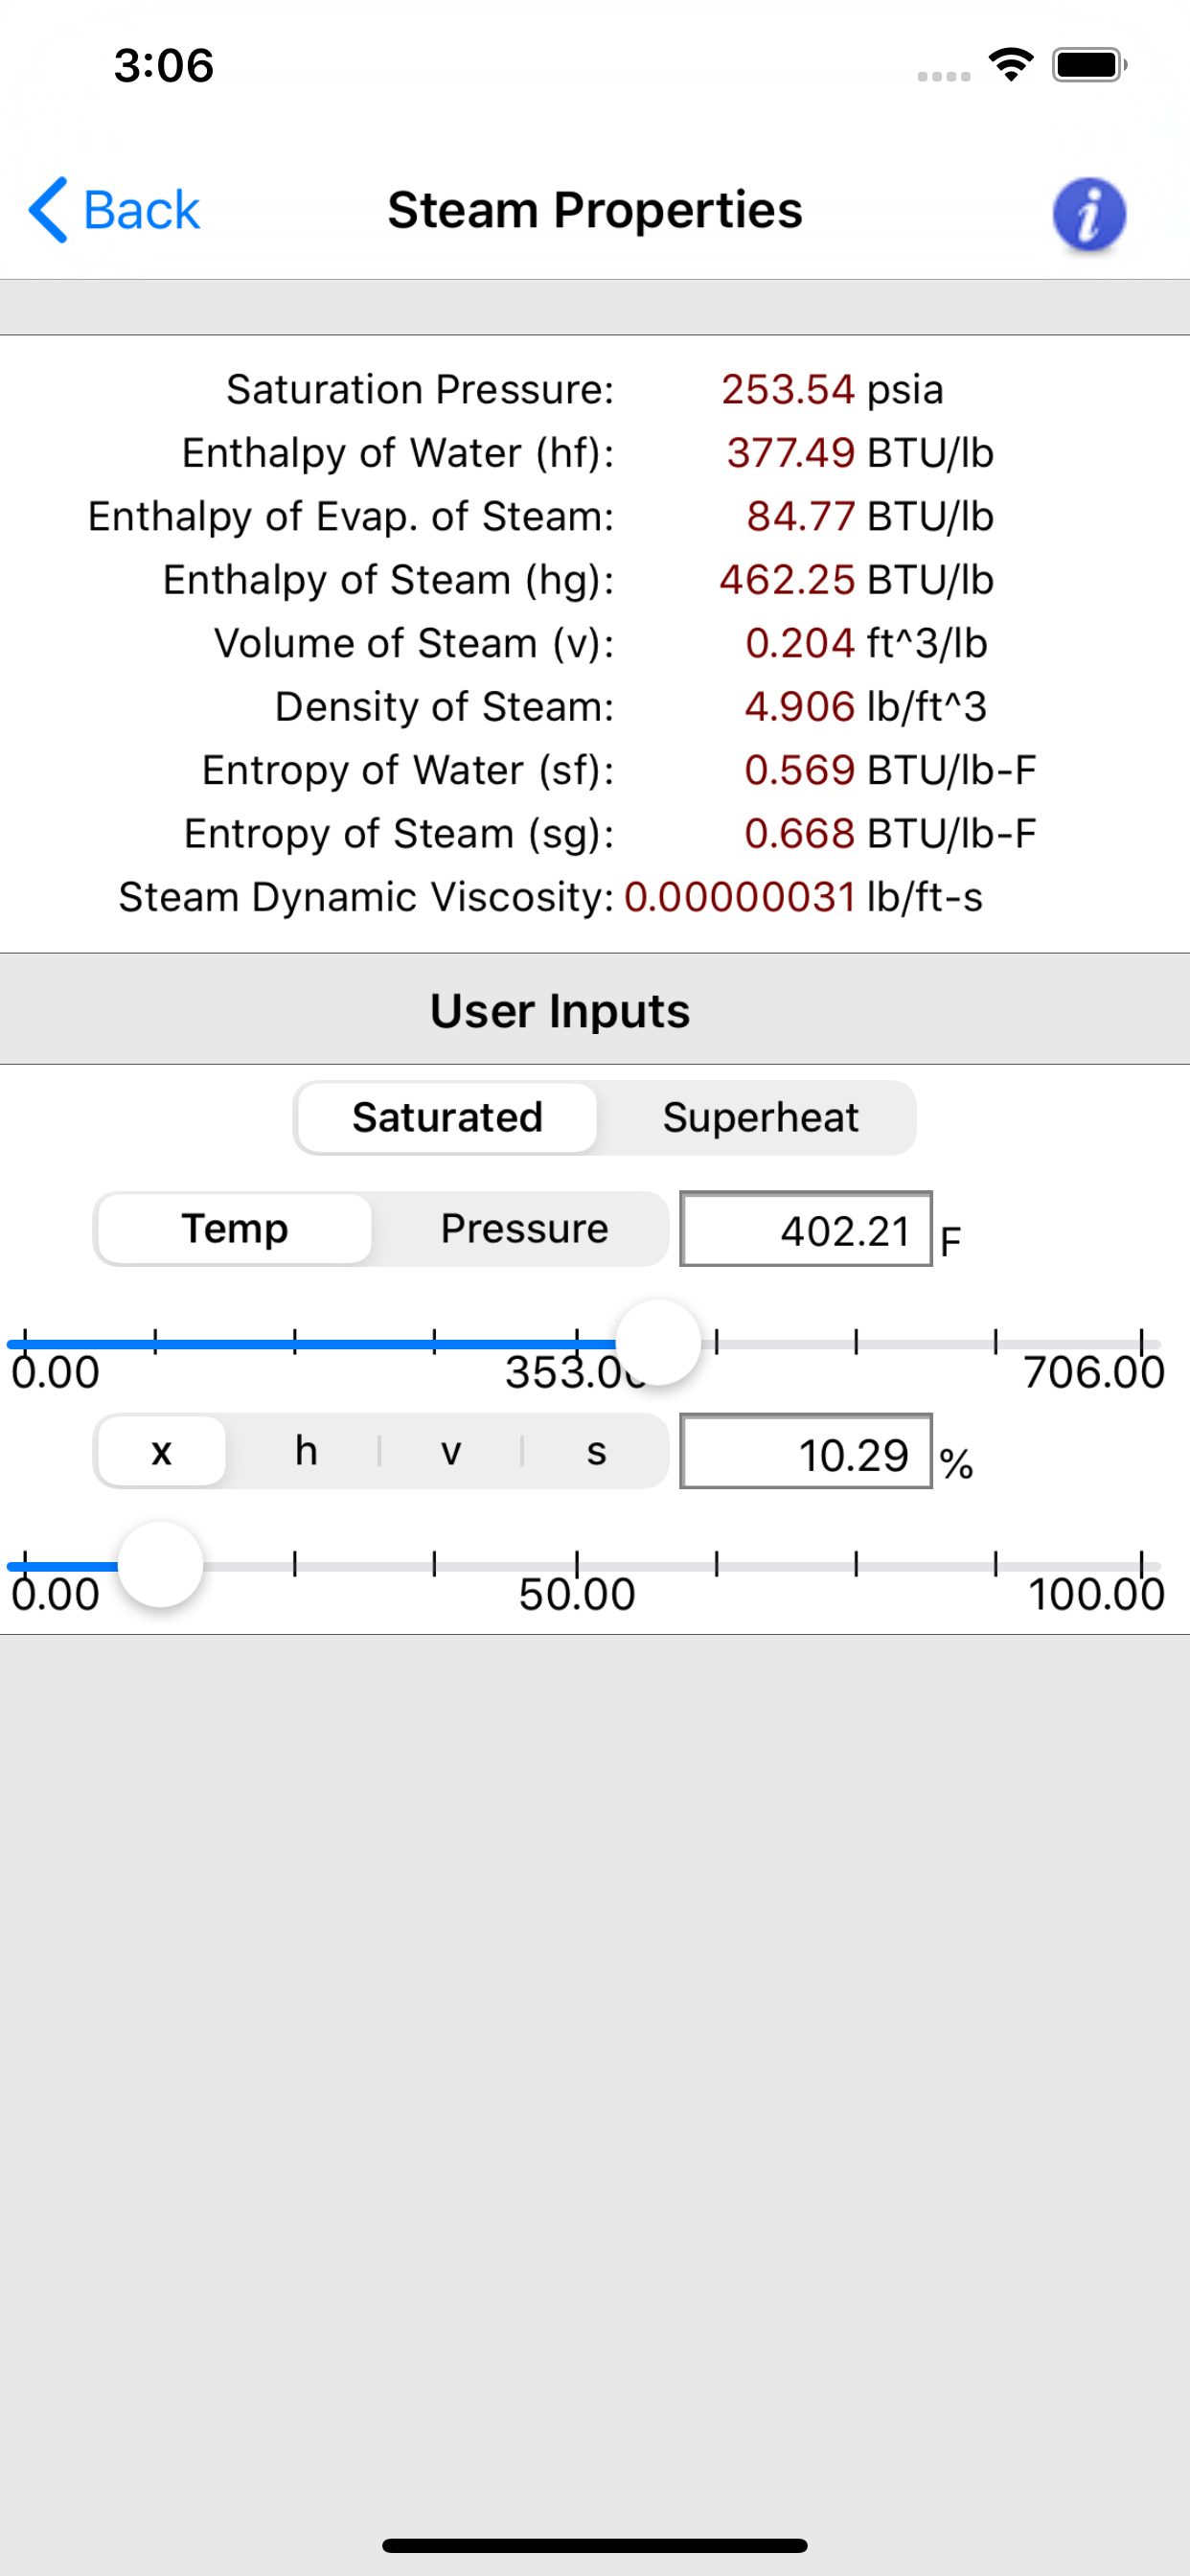 HVAC Pipe Sizer Steam App